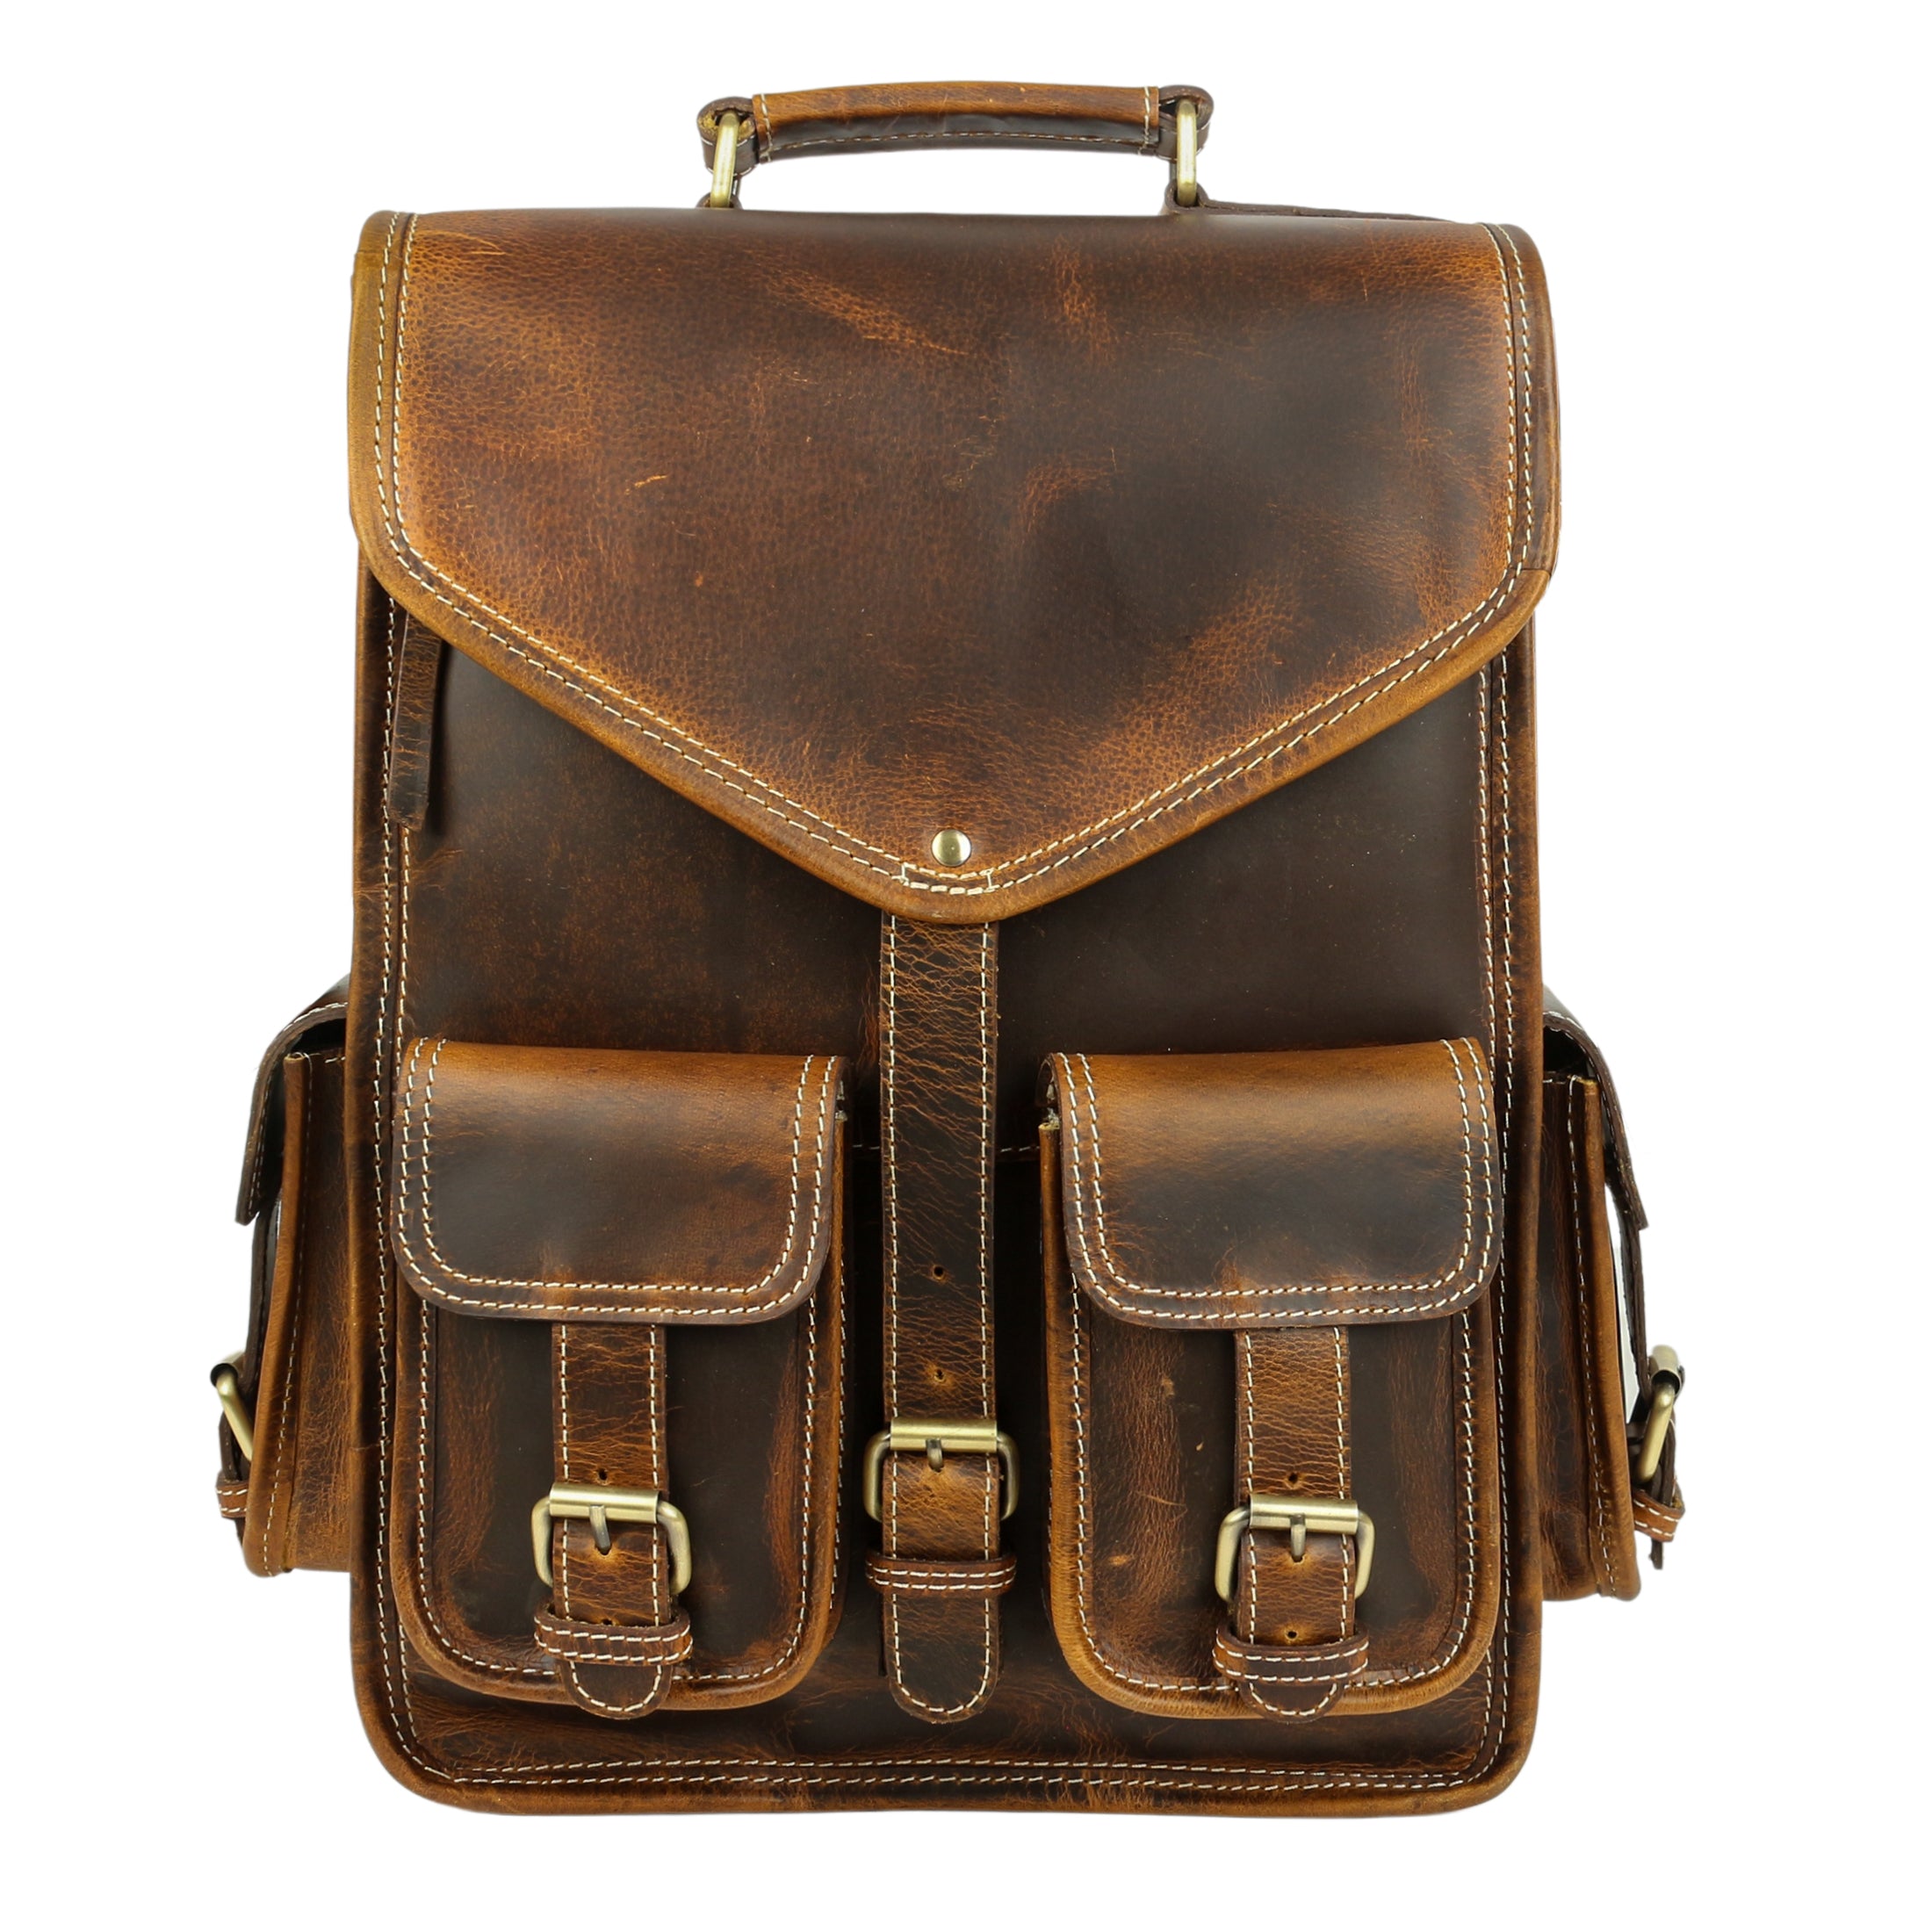 KomalC Leather Shoulder Bag Tote for Women Purse Satchel Travel Bag sh